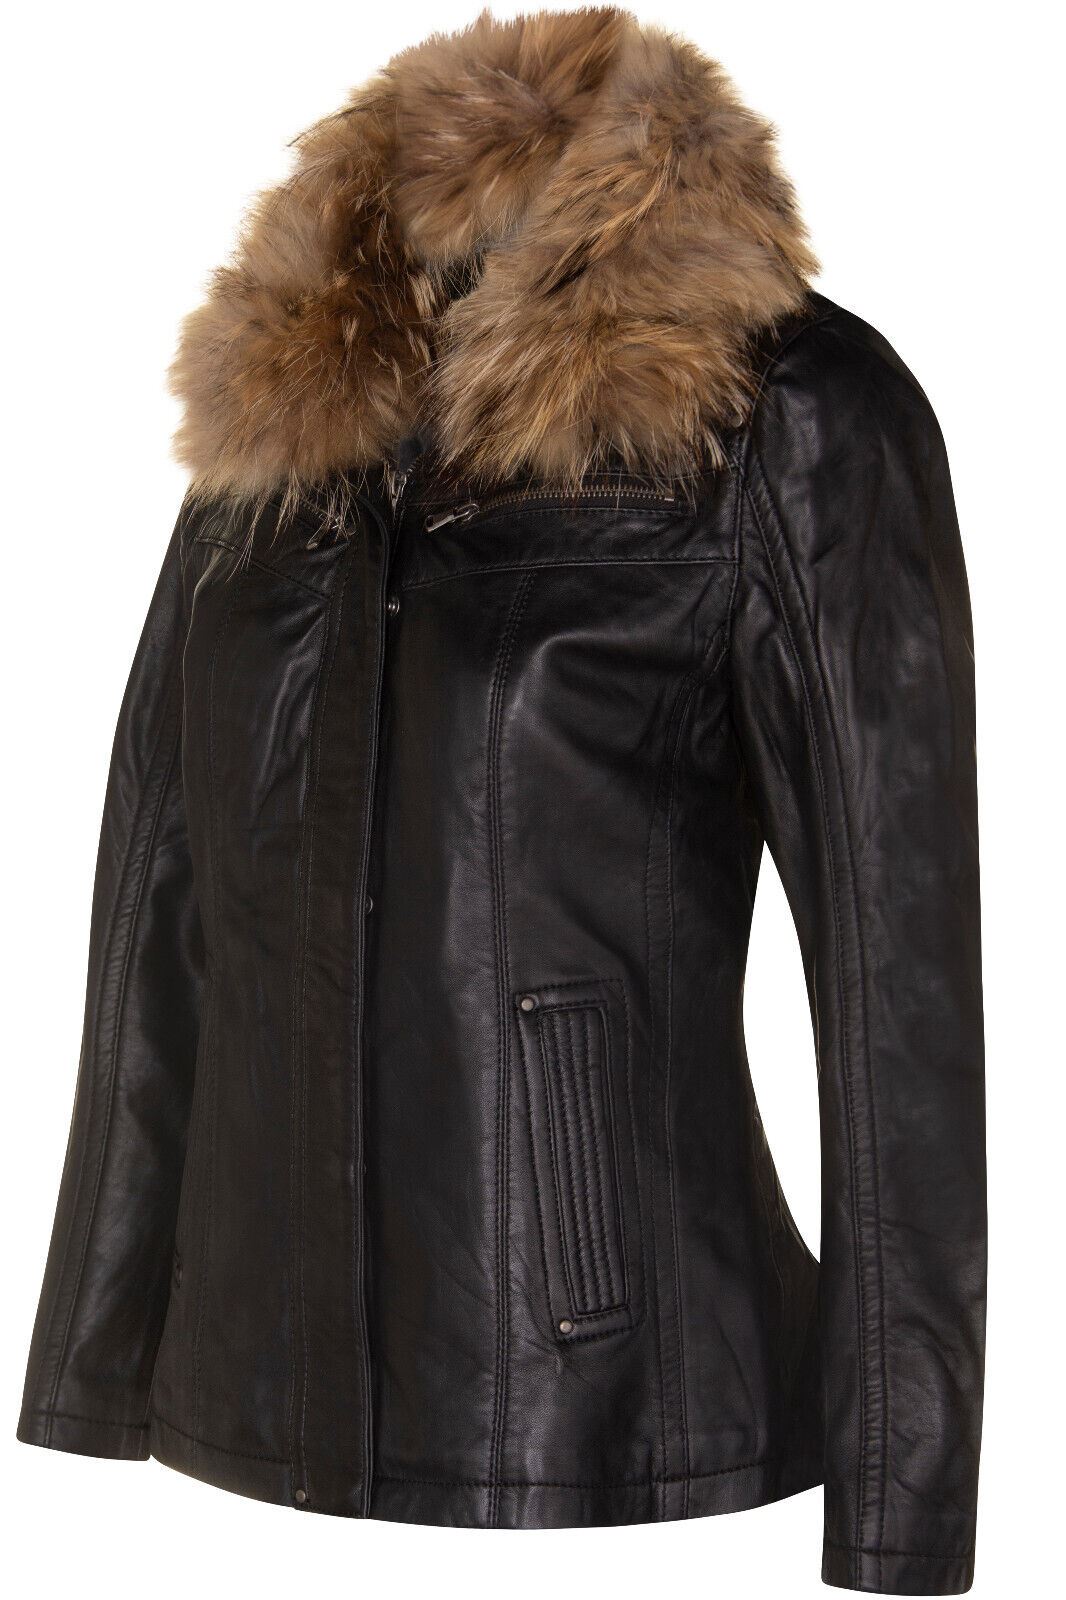 Womens Slim Fit Leather Parker Jacket-Millom - Upperclass Fashions 